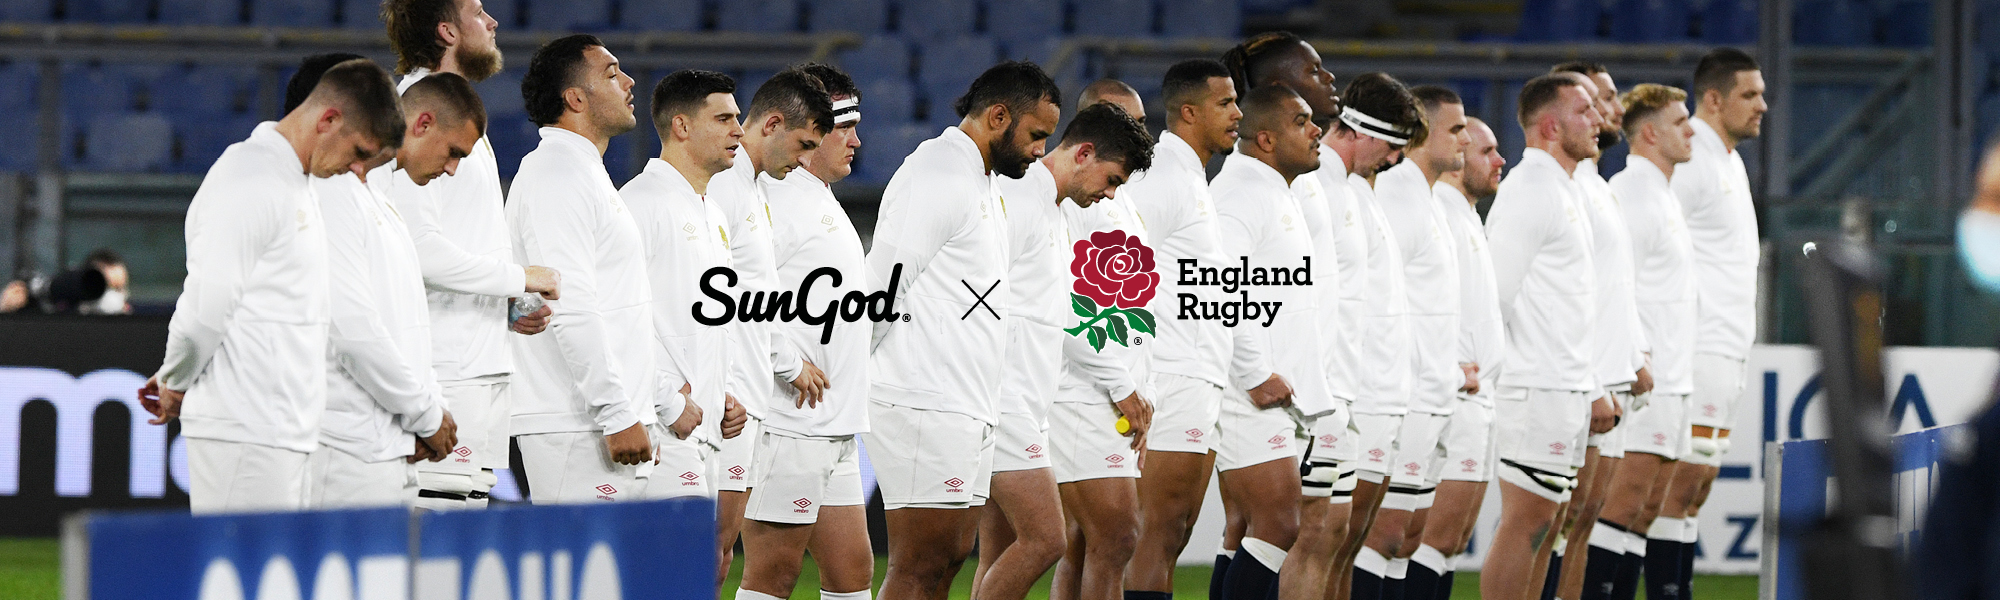 SunGod X England Rugby